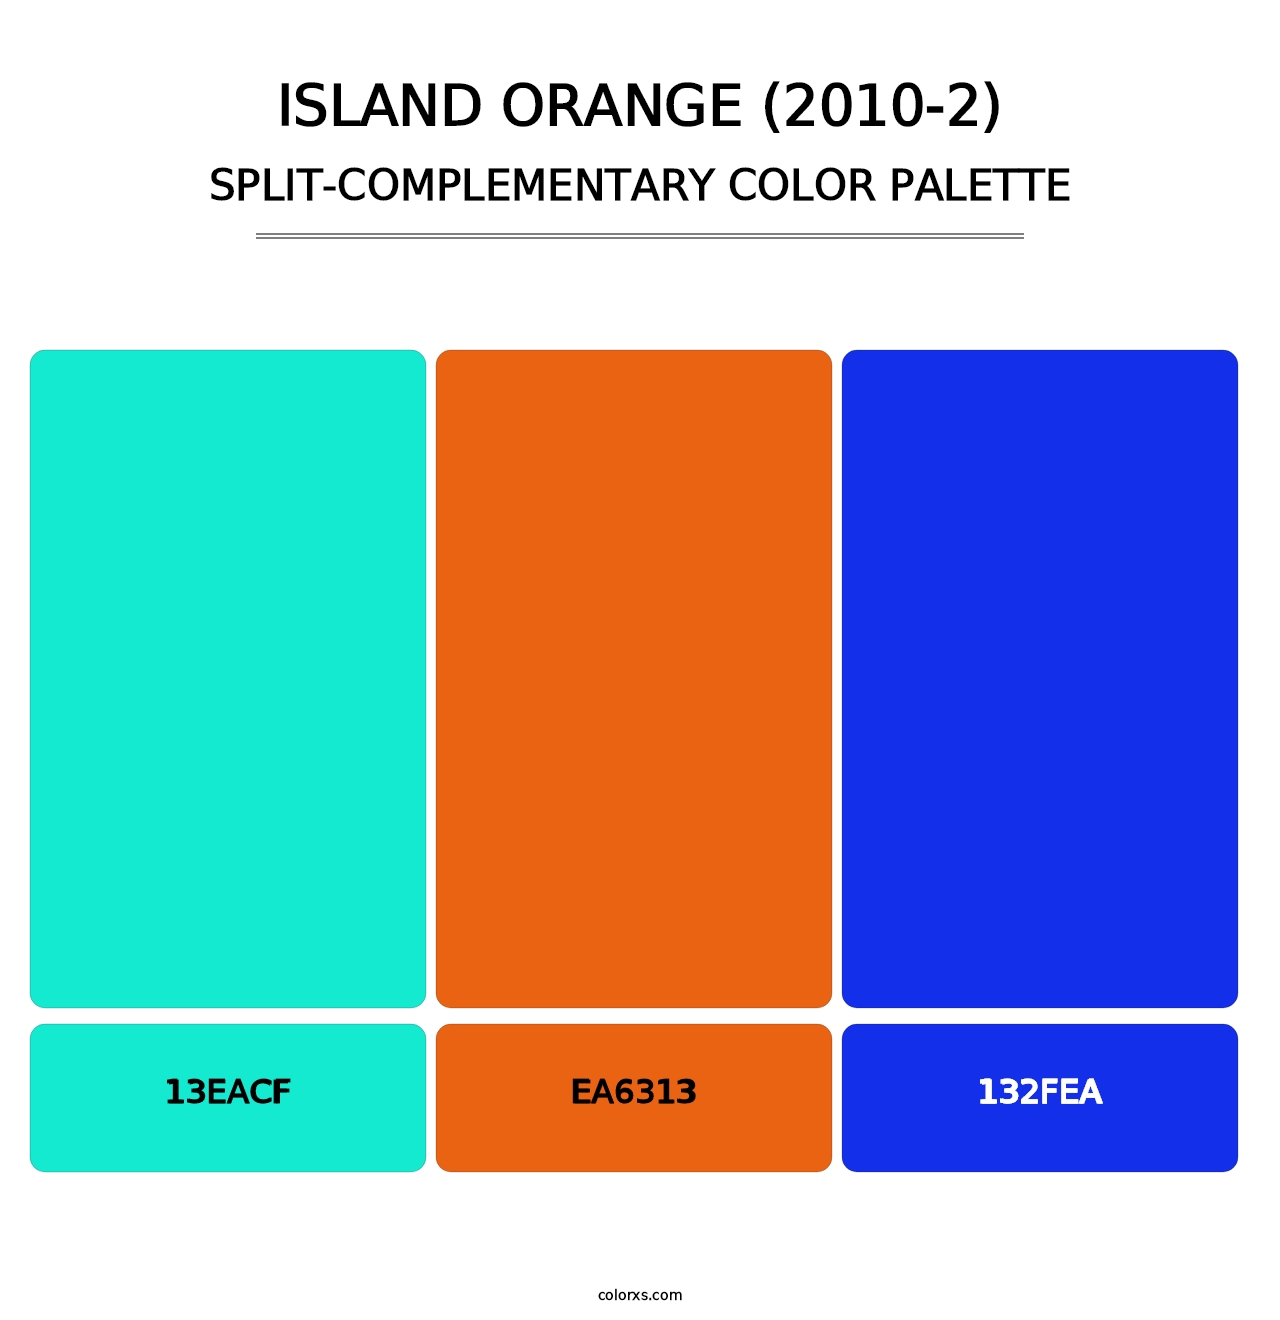 Island Orange (2010-2) - Split-Complementary Color Palette